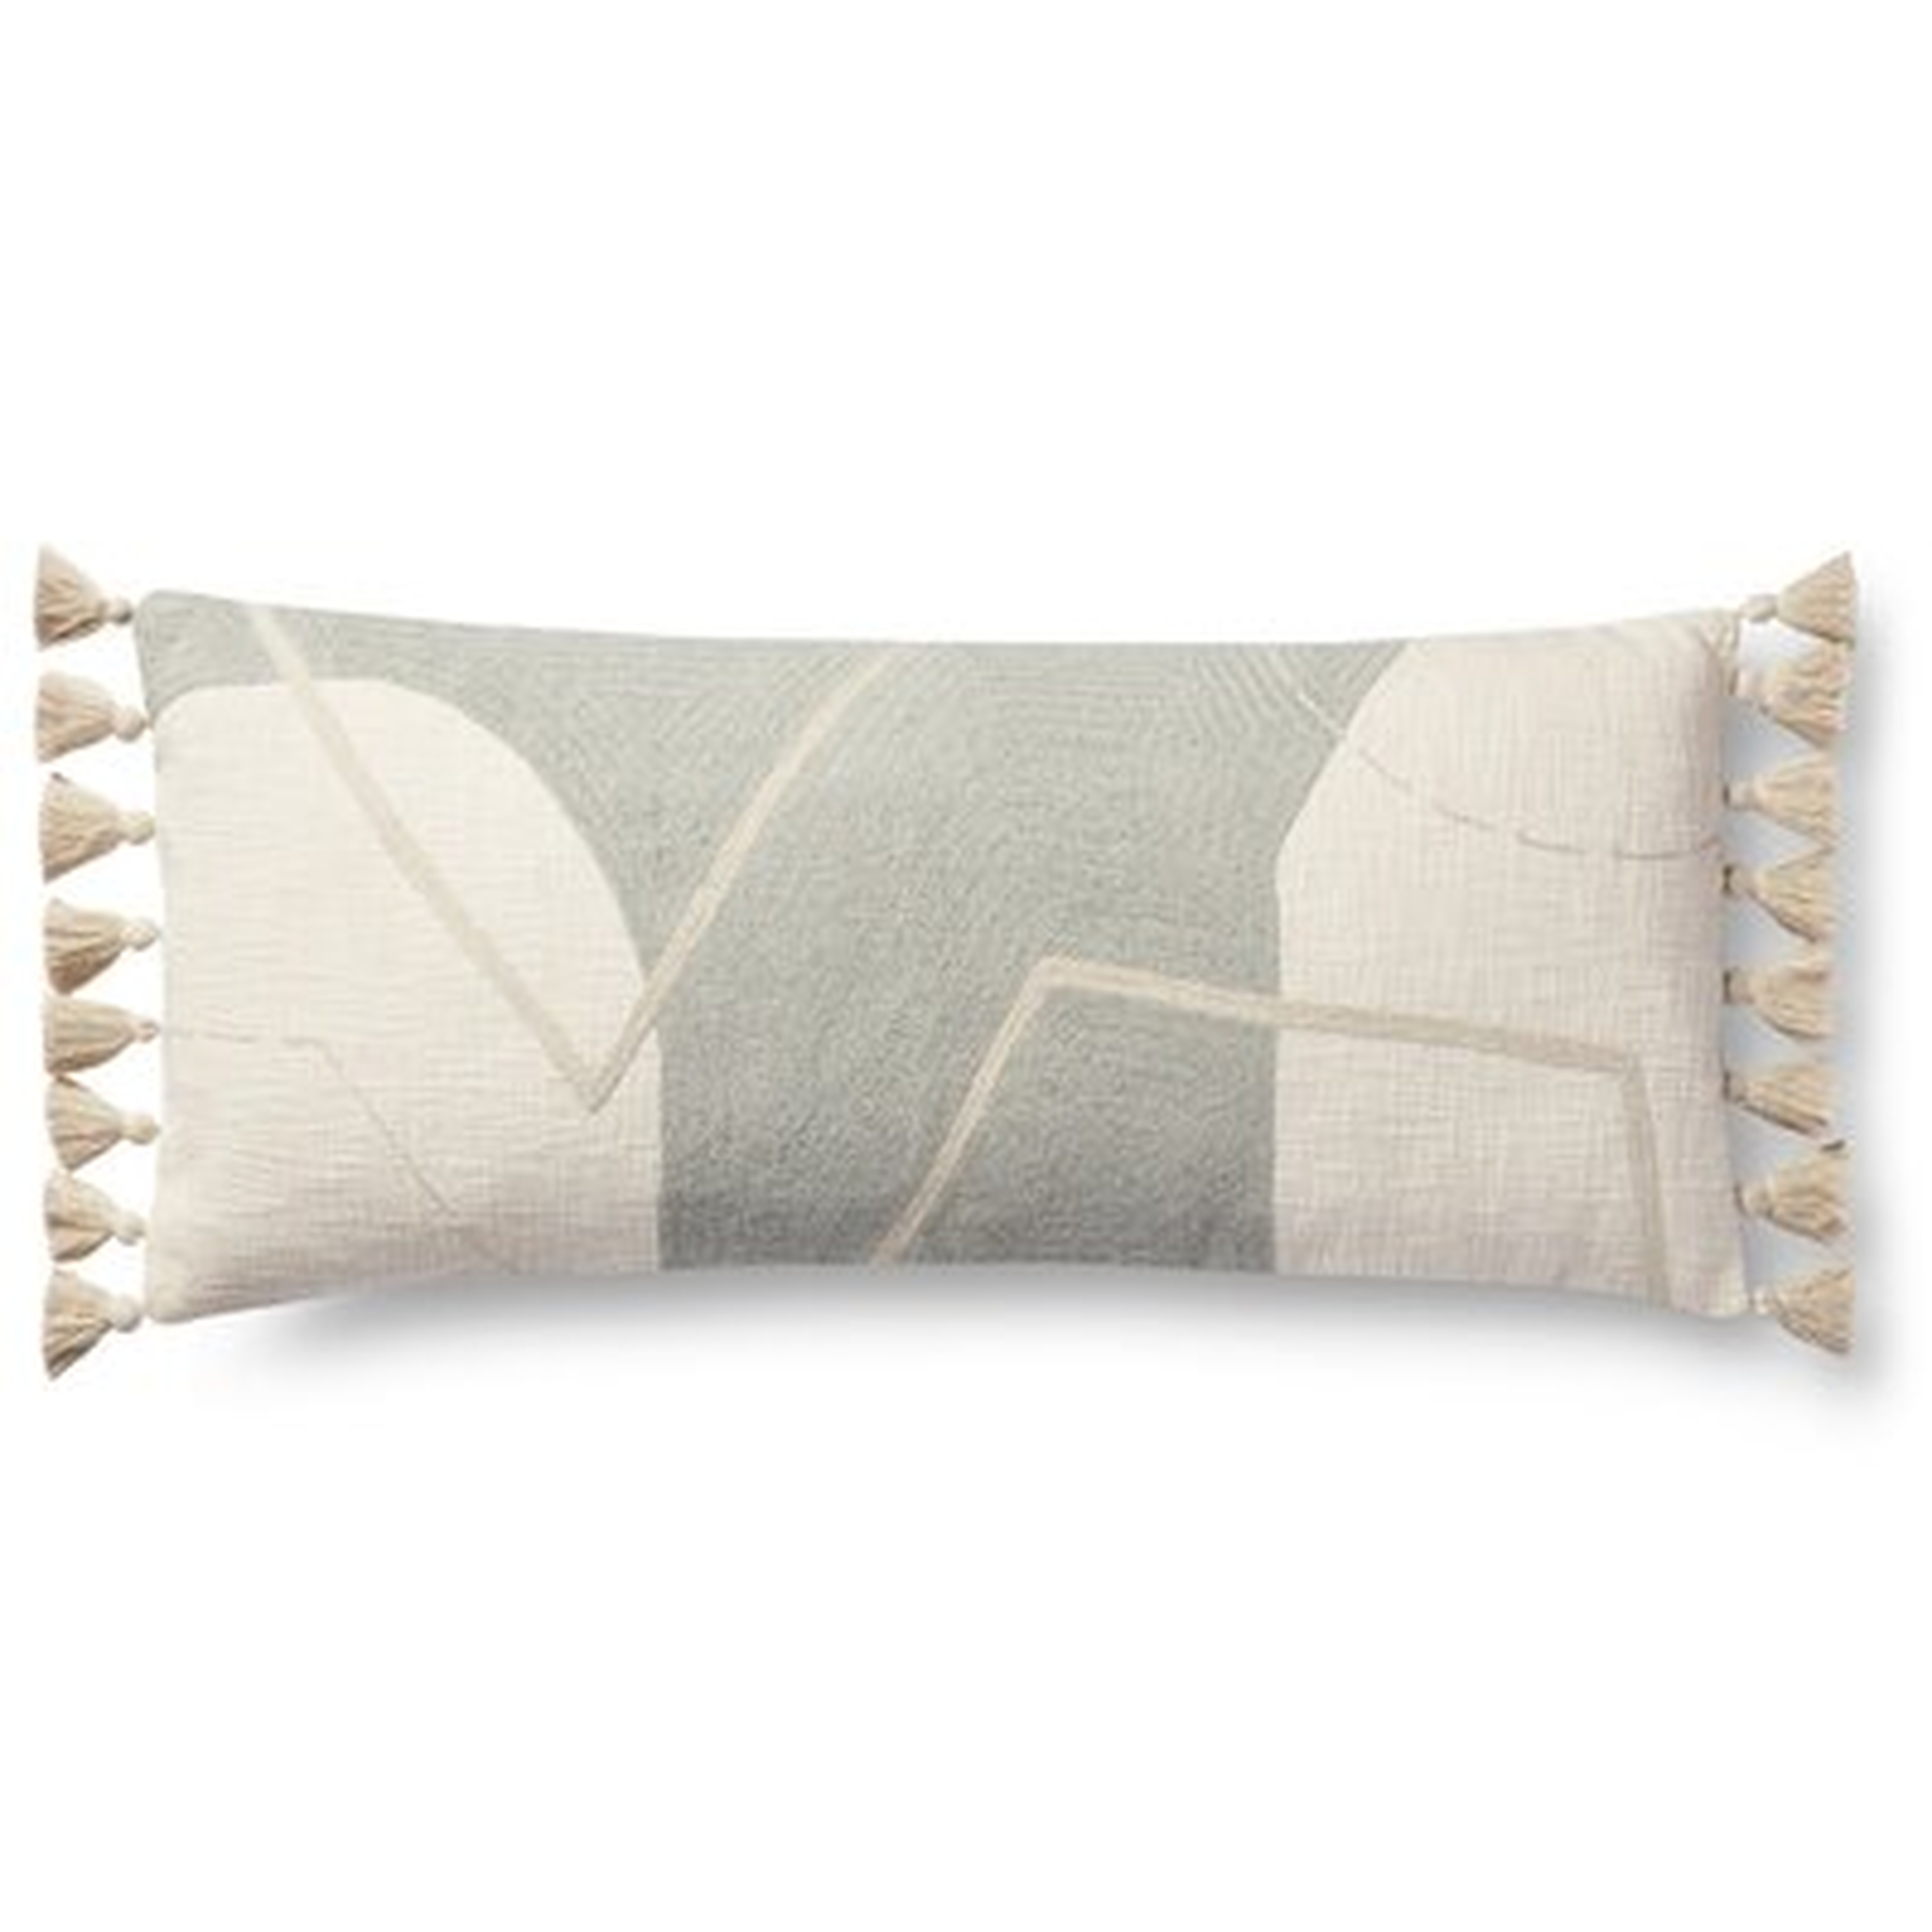 Decorative Rectangular Cotton Pillow Cover and Insert - AllModern